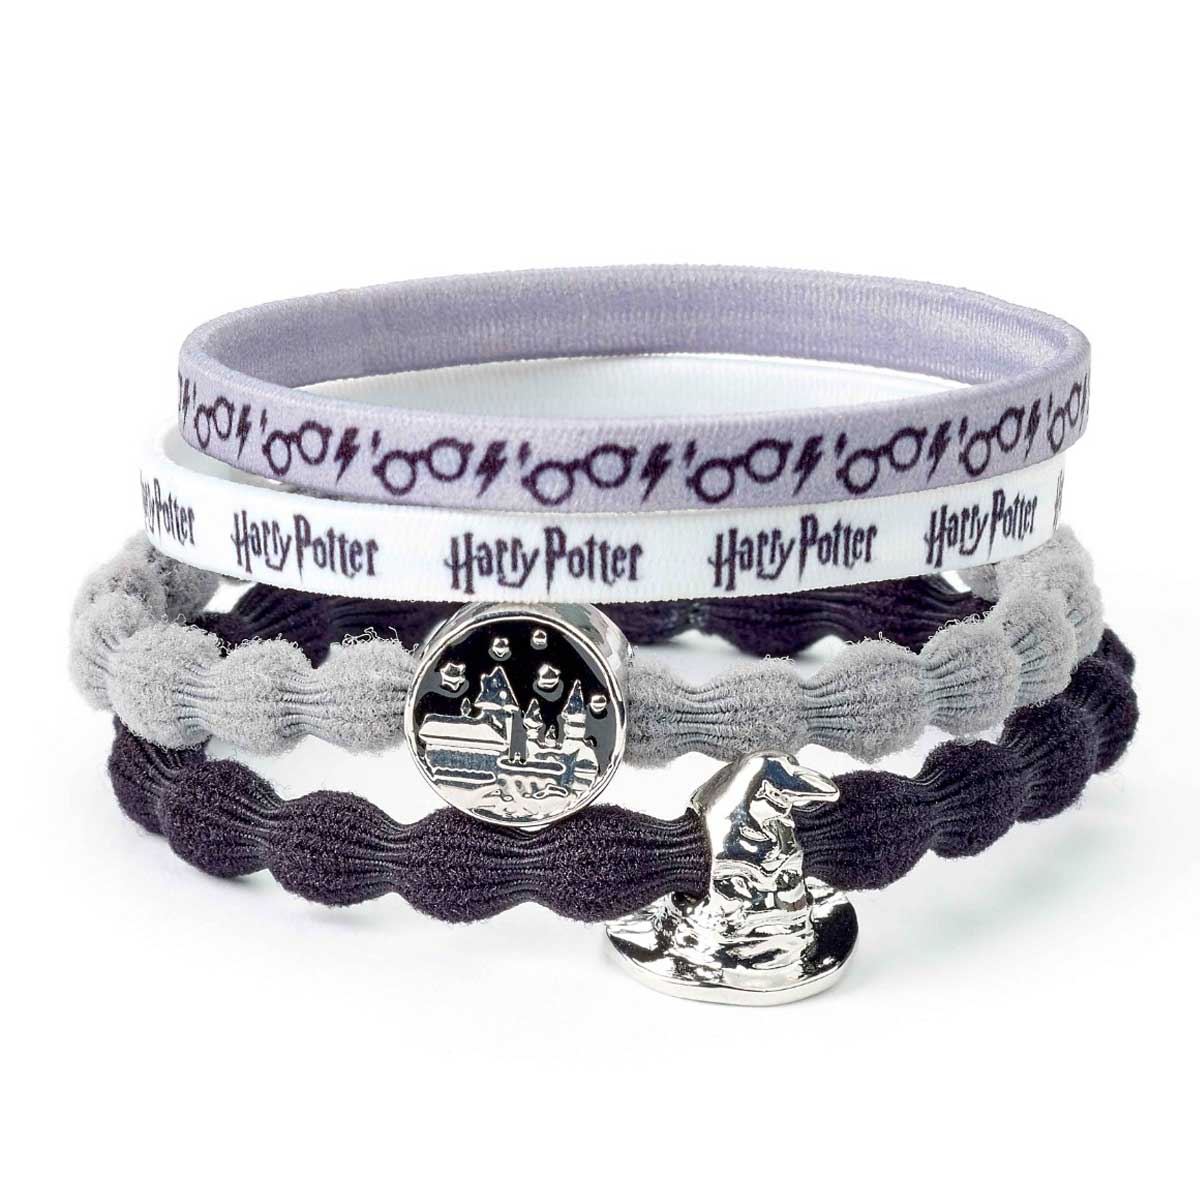 Hogwarts & Sorting Hat Hair Band Set